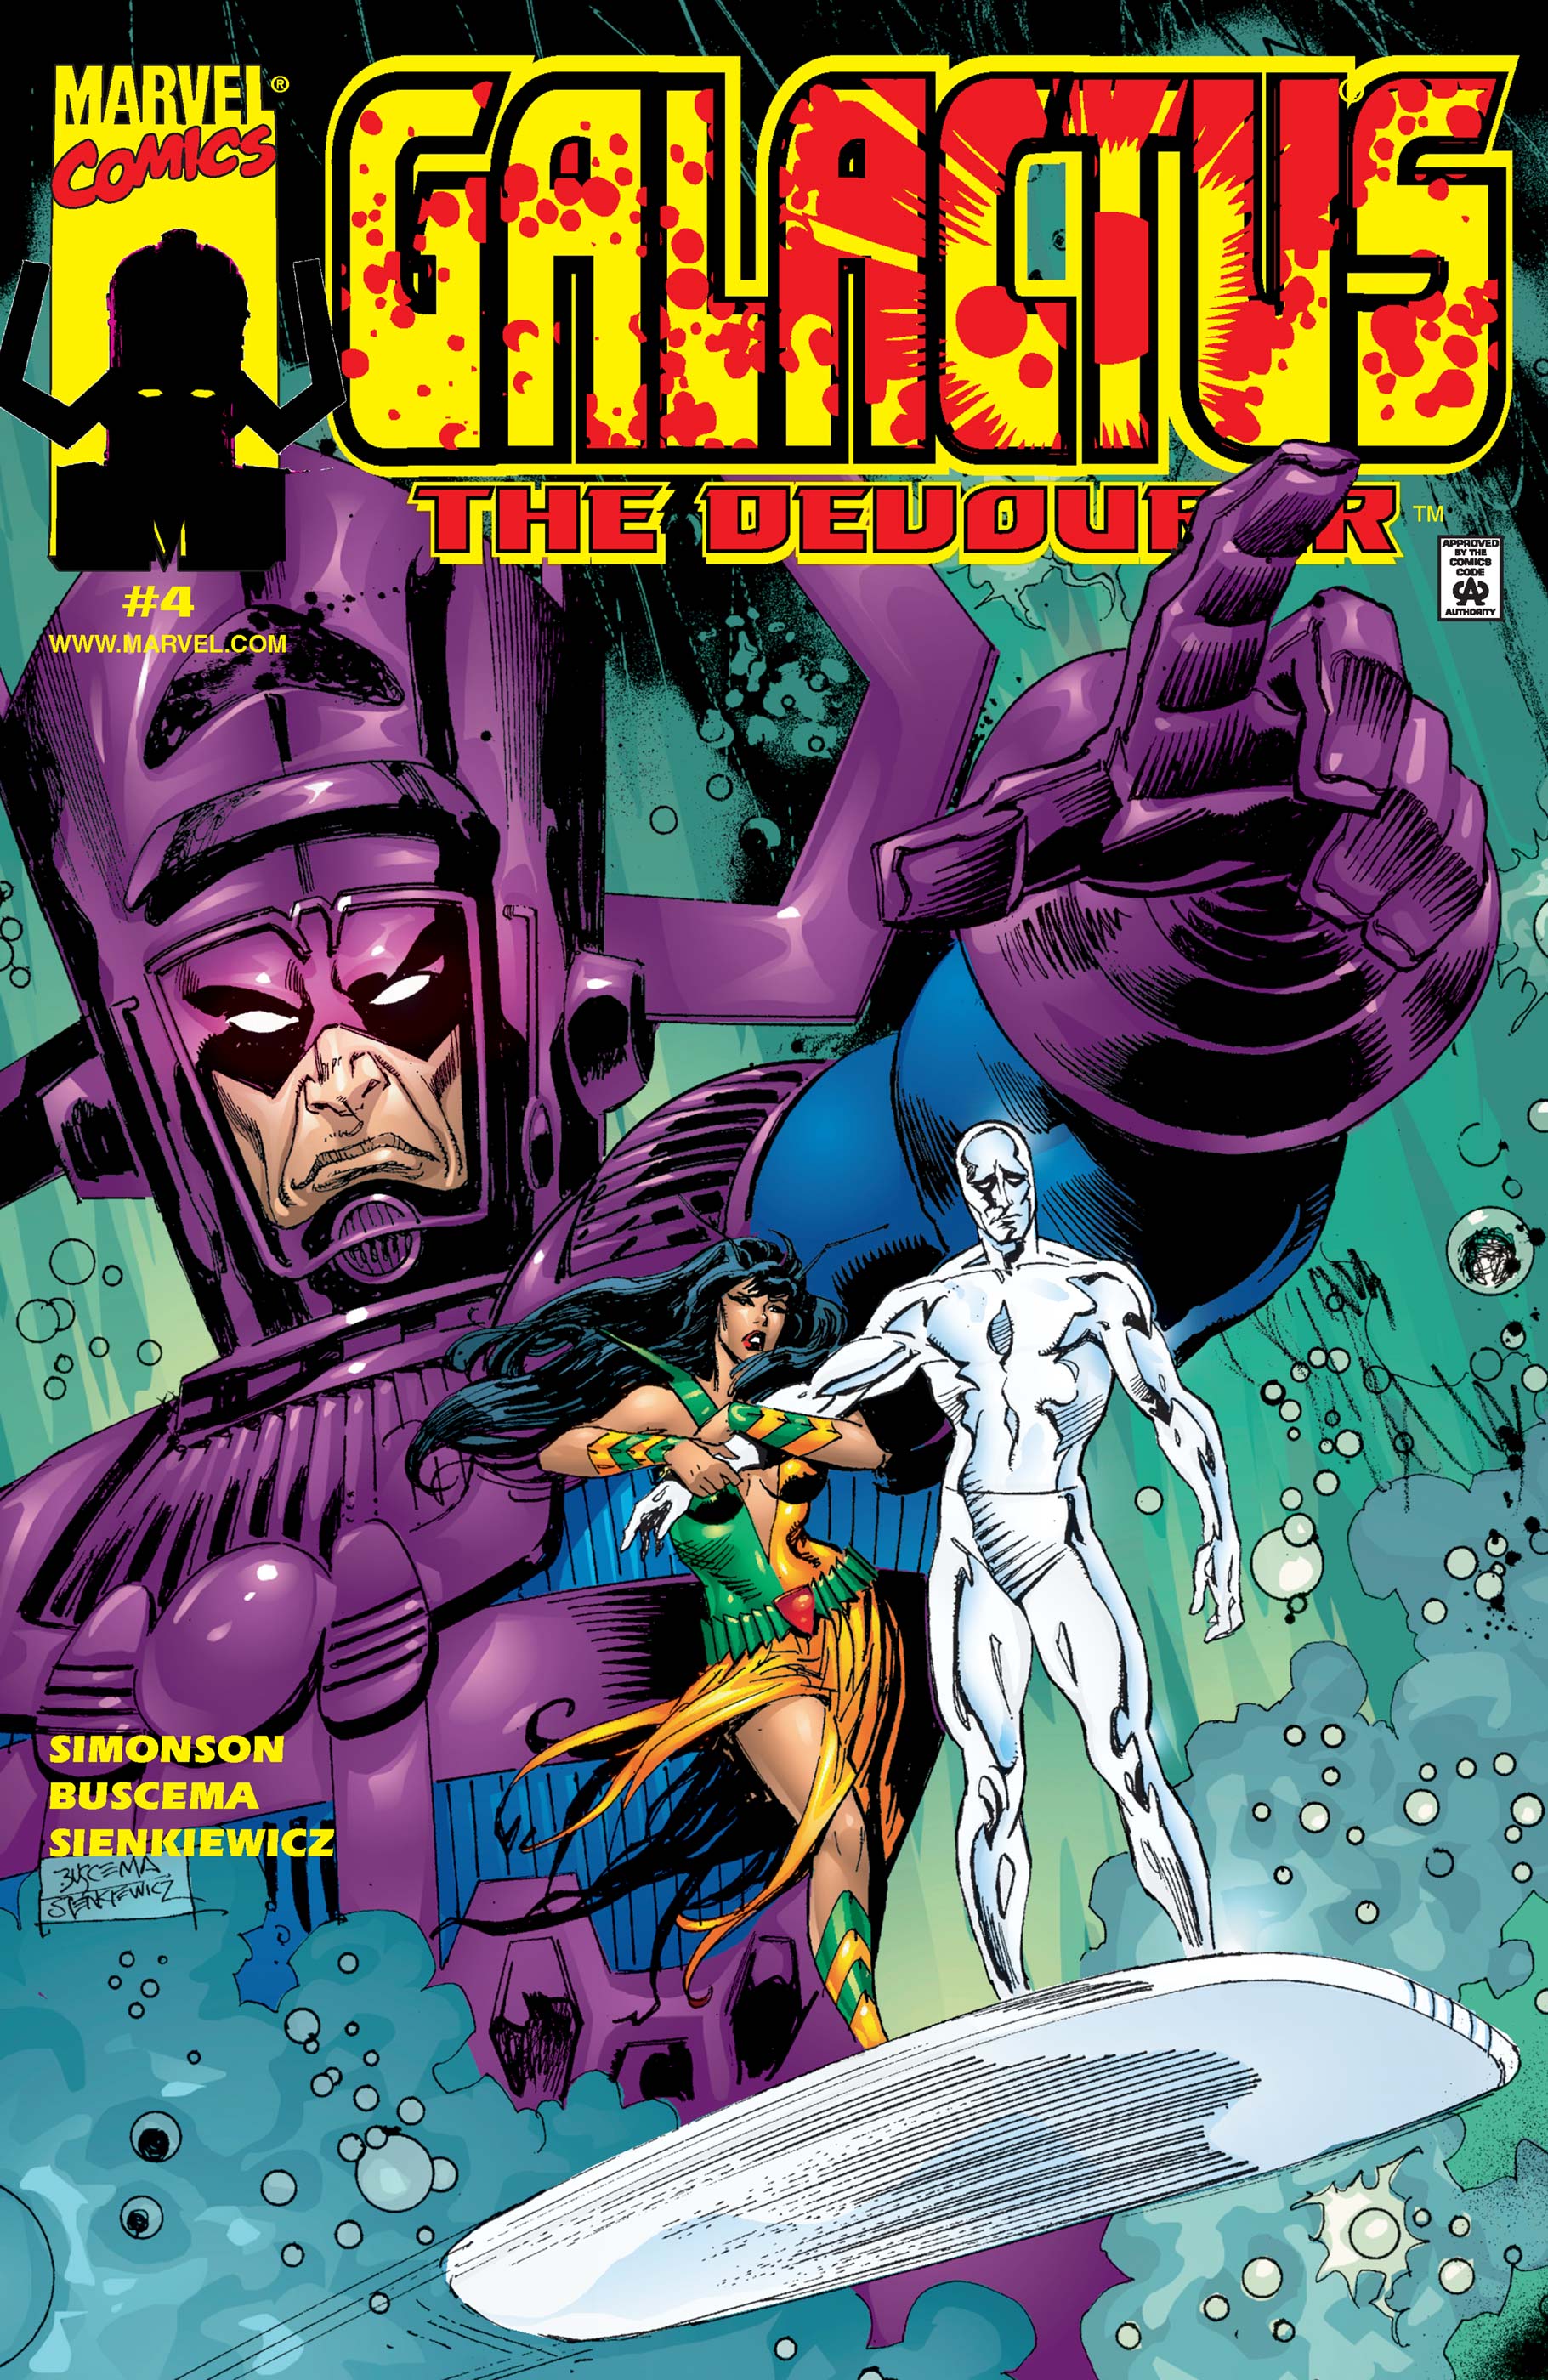 Galactus the Devourer (1999) #4